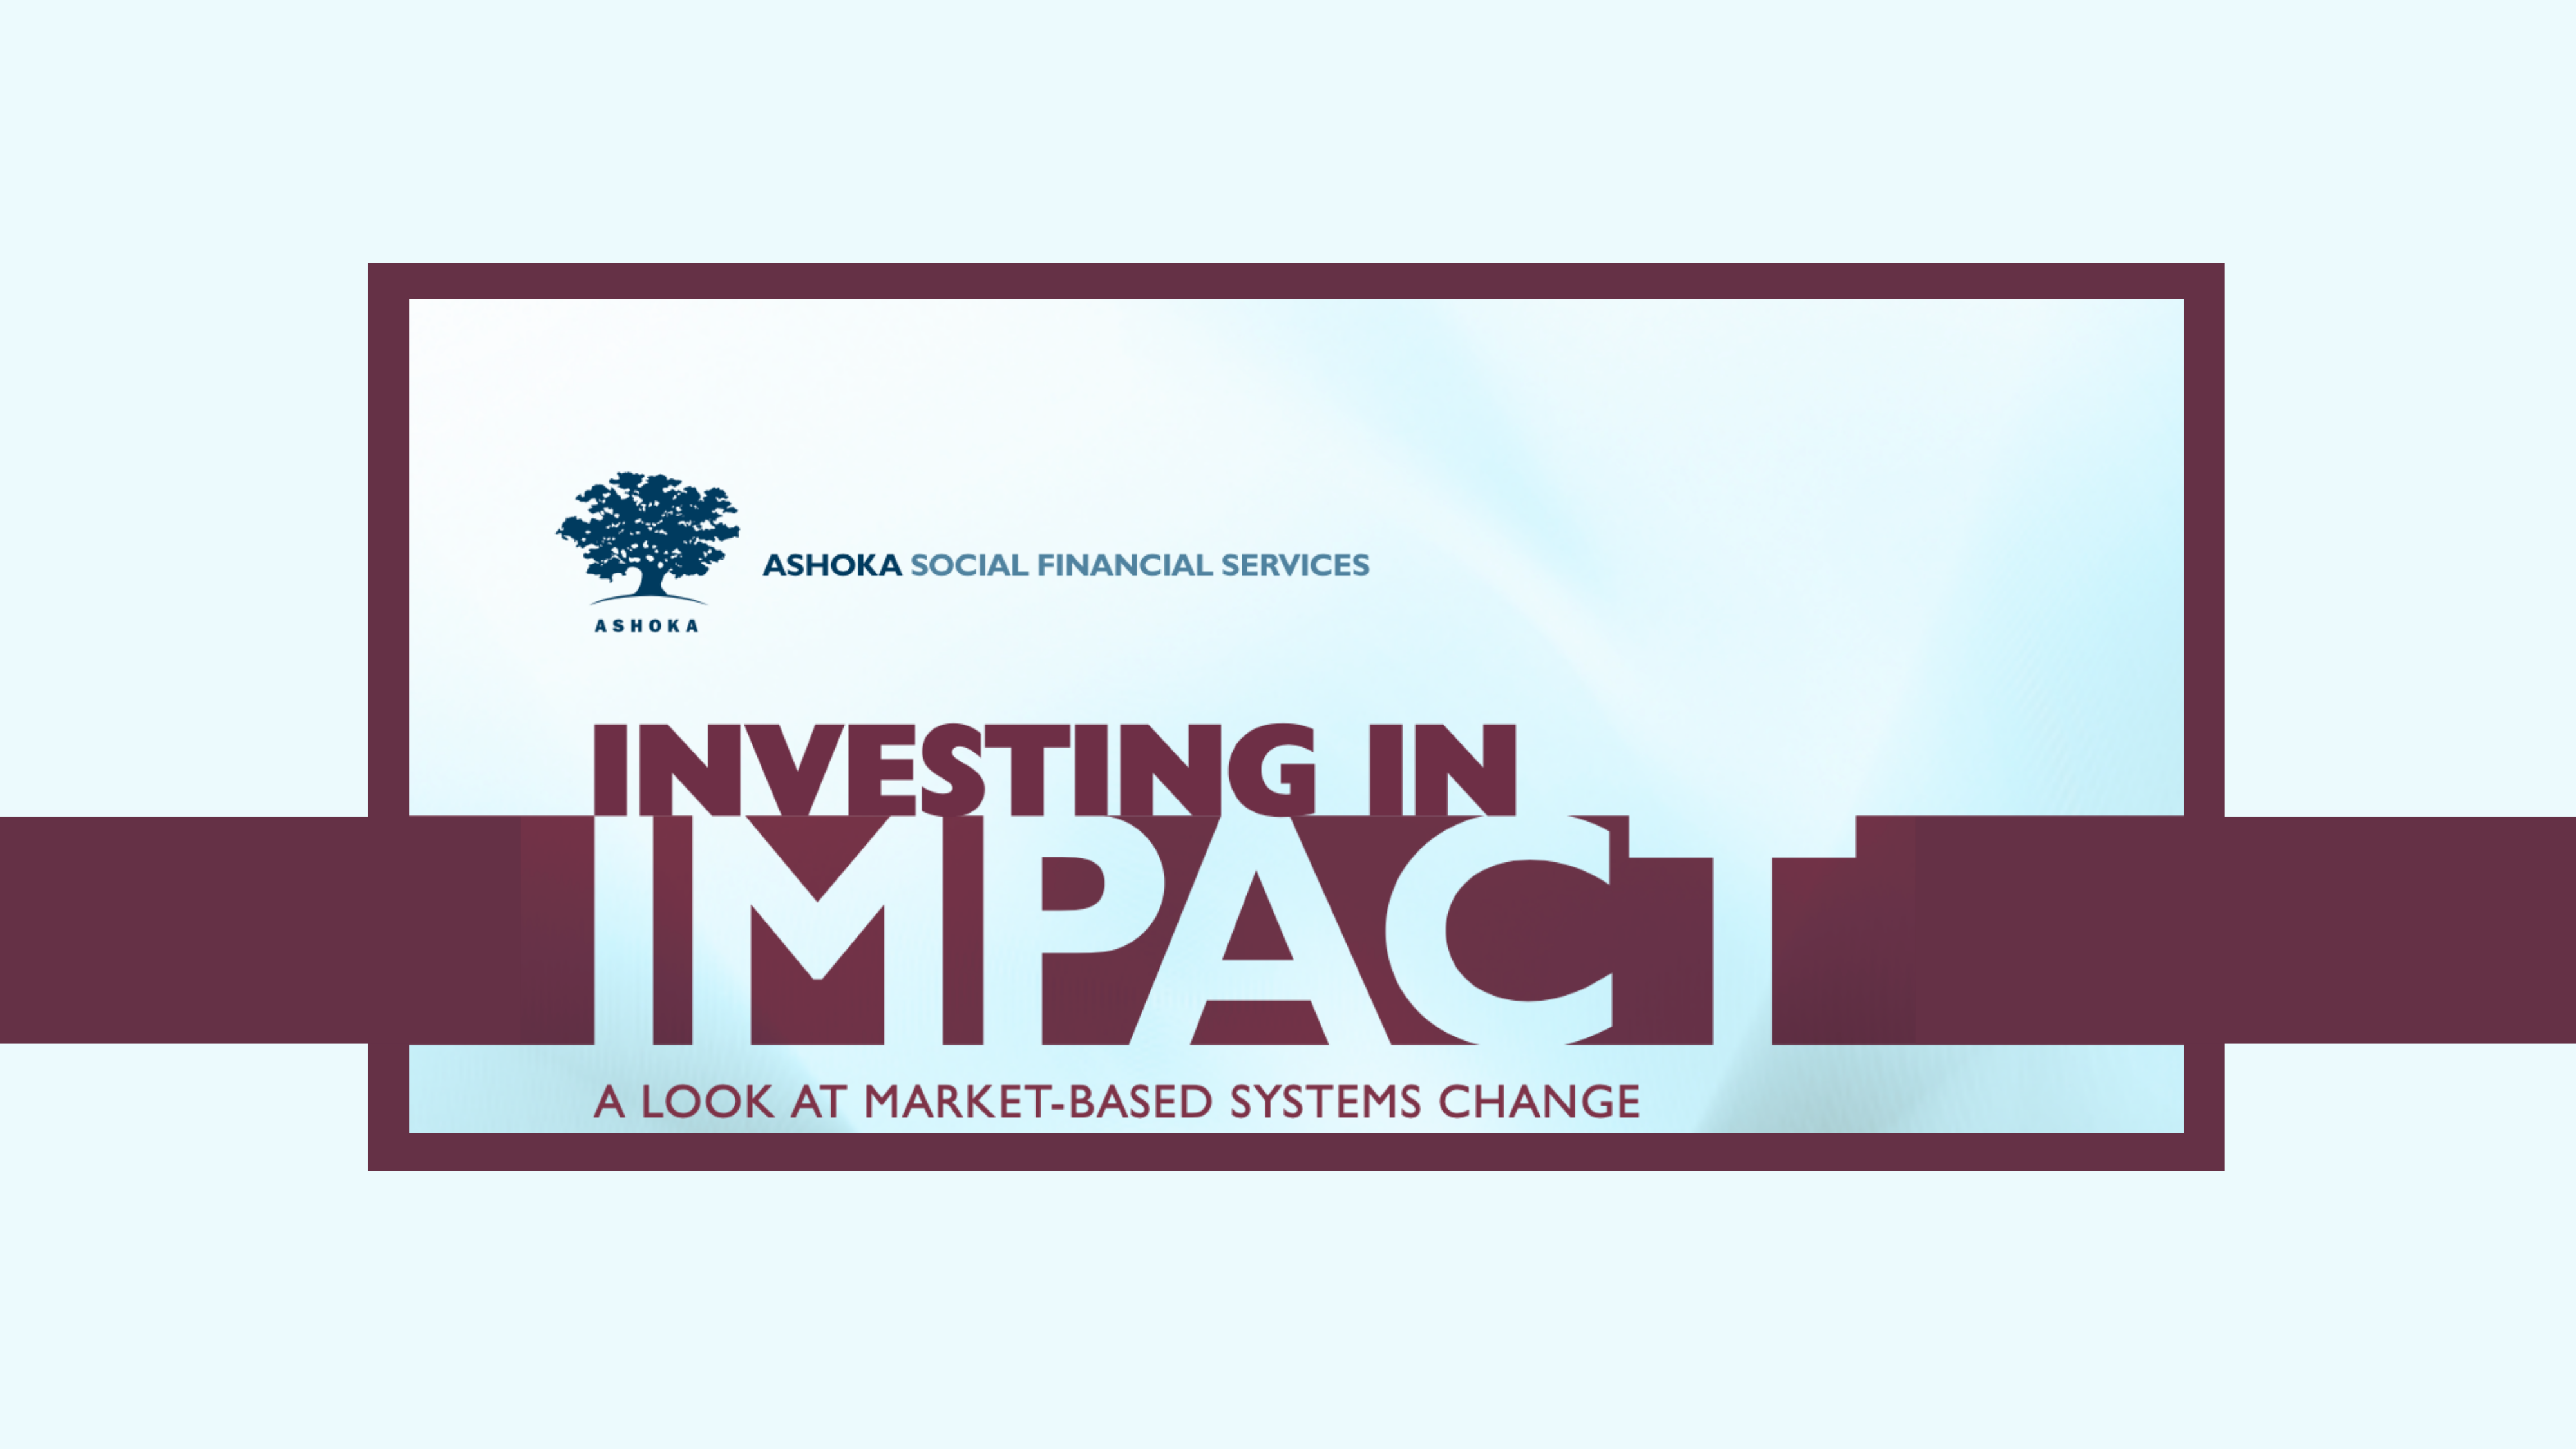 Investing in Impact